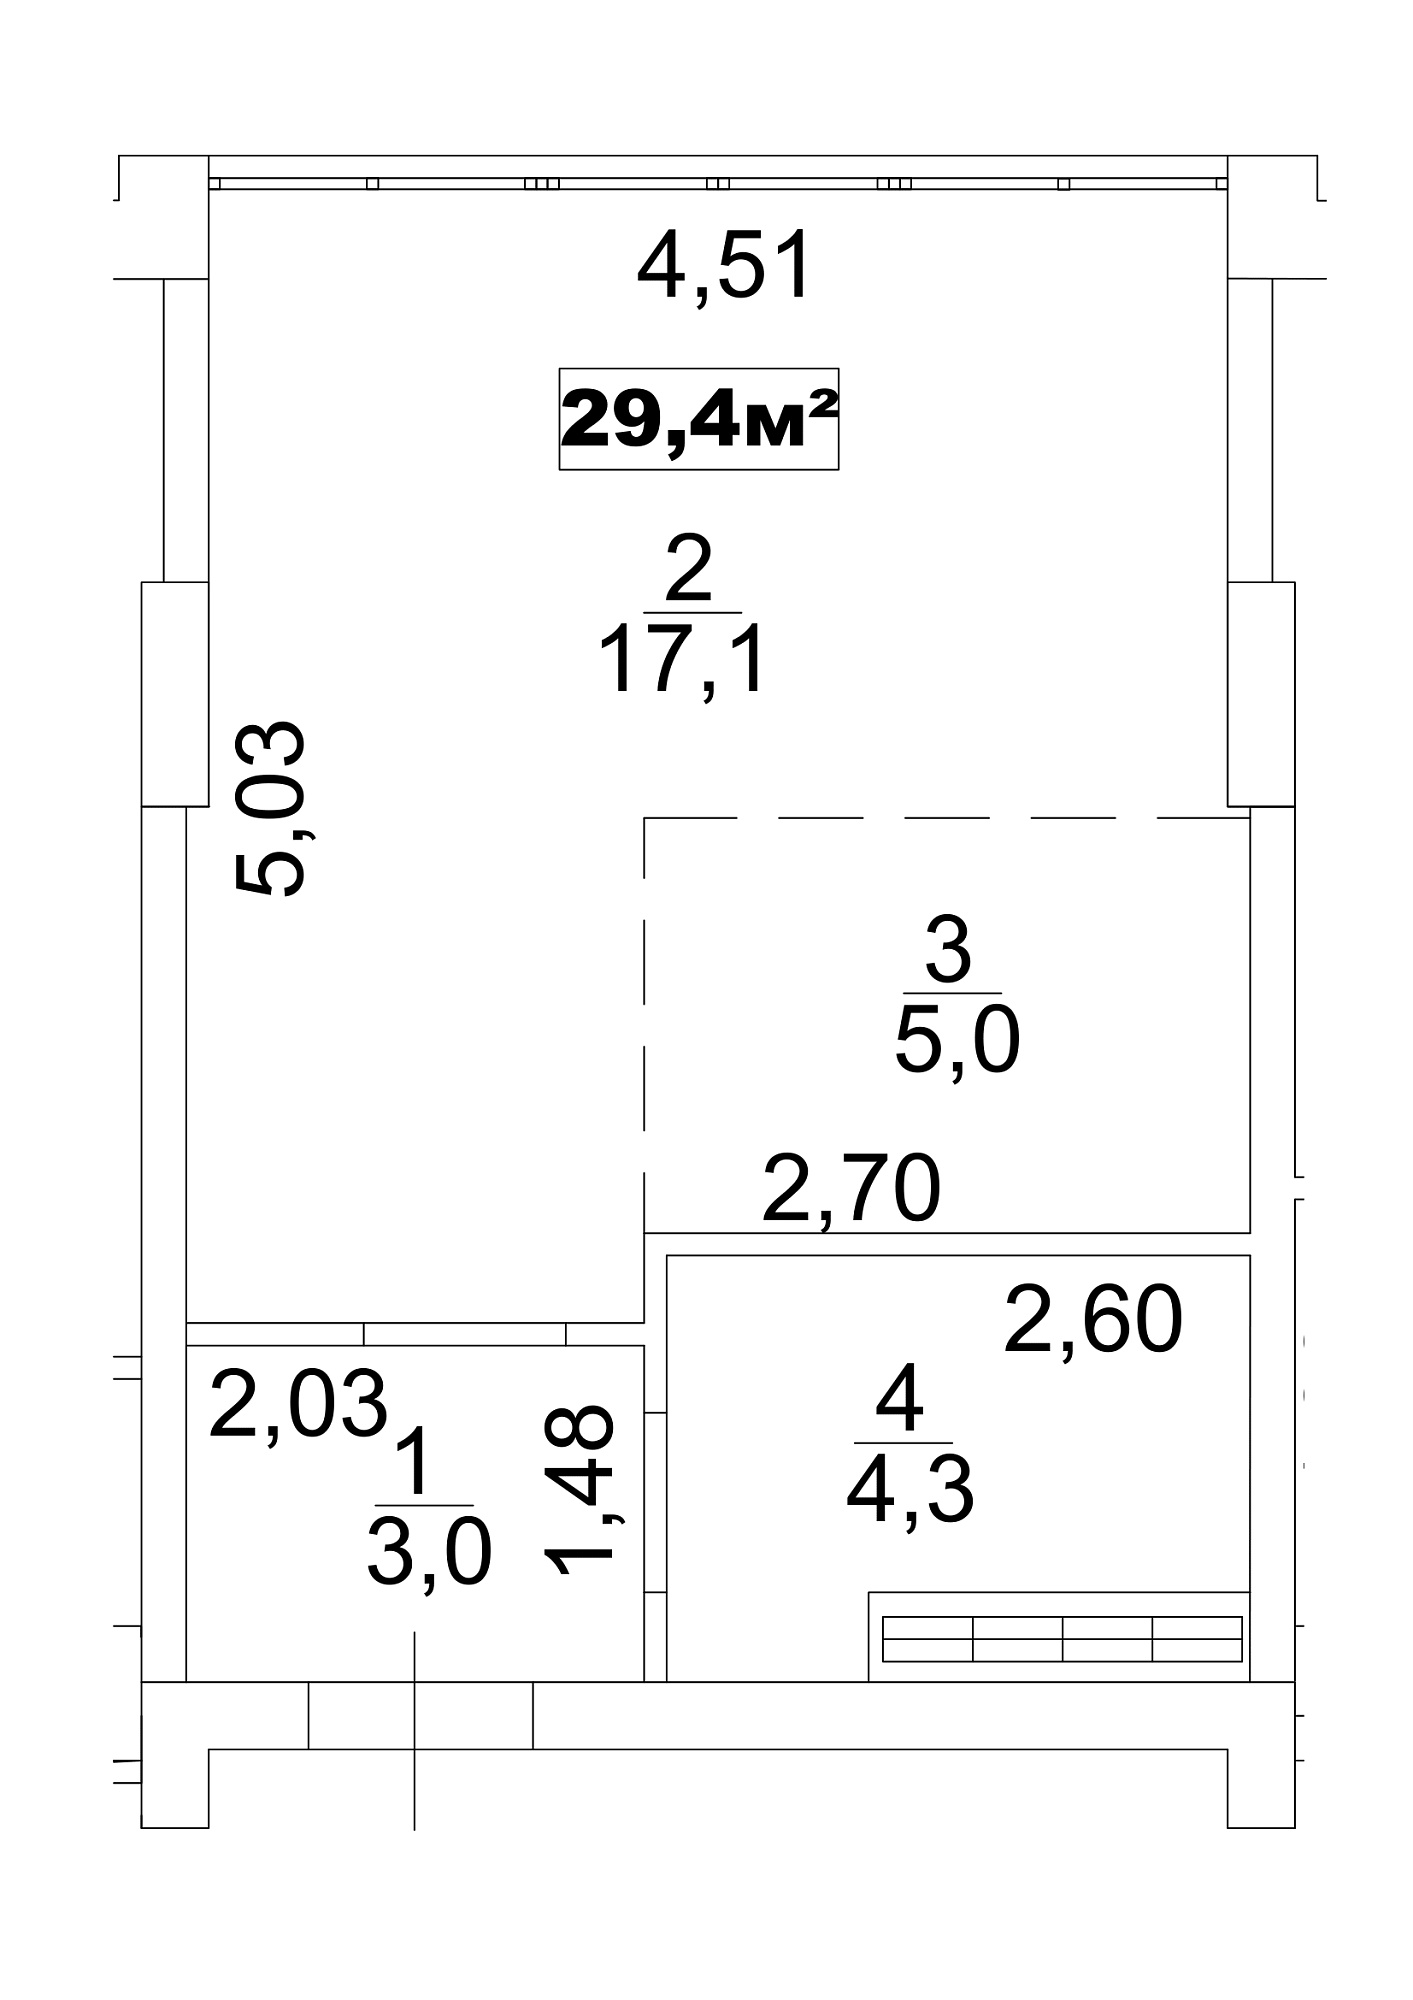 Planning Smart flats area 29.4m2, AB-13-02/00011.